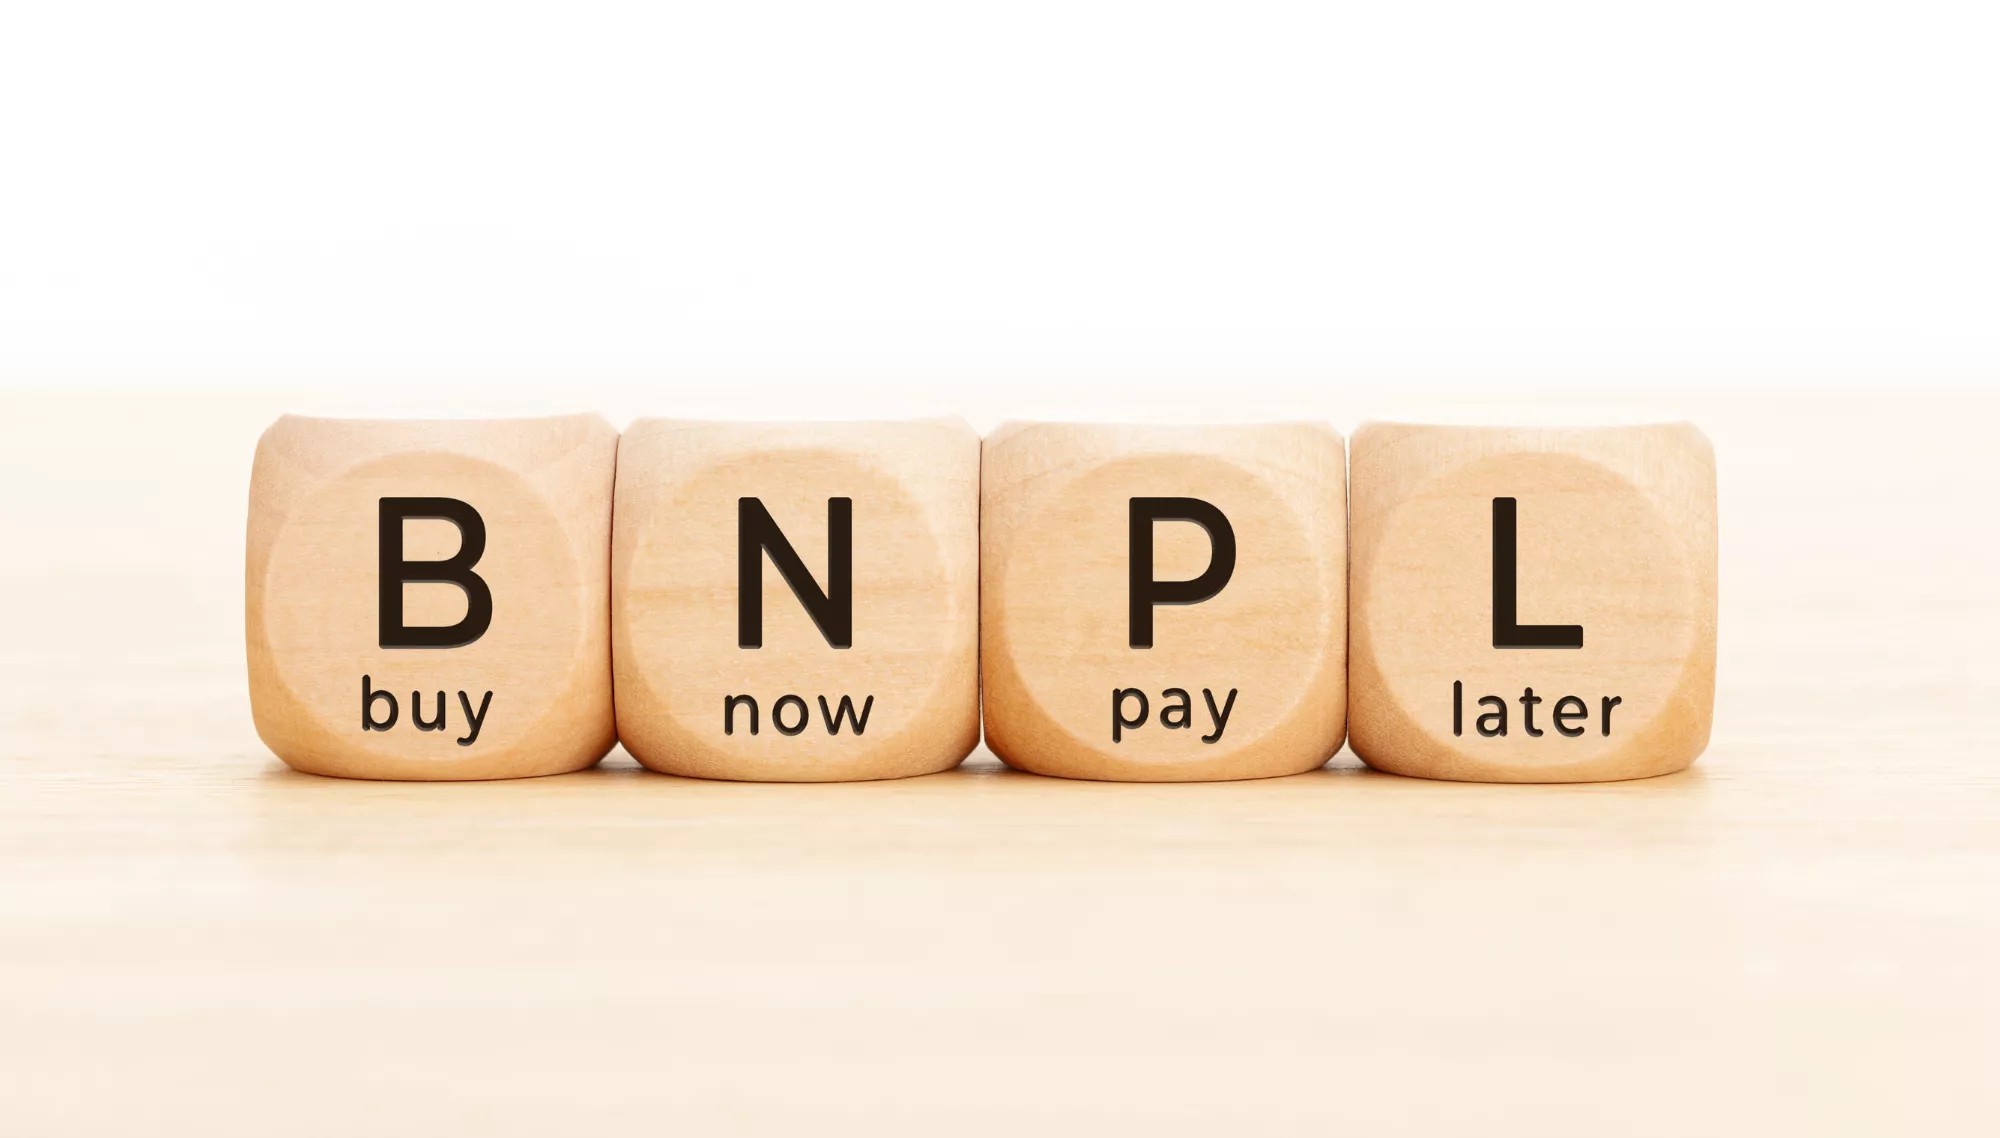 Scrabble letter blocks reading BNPL representing Perpay